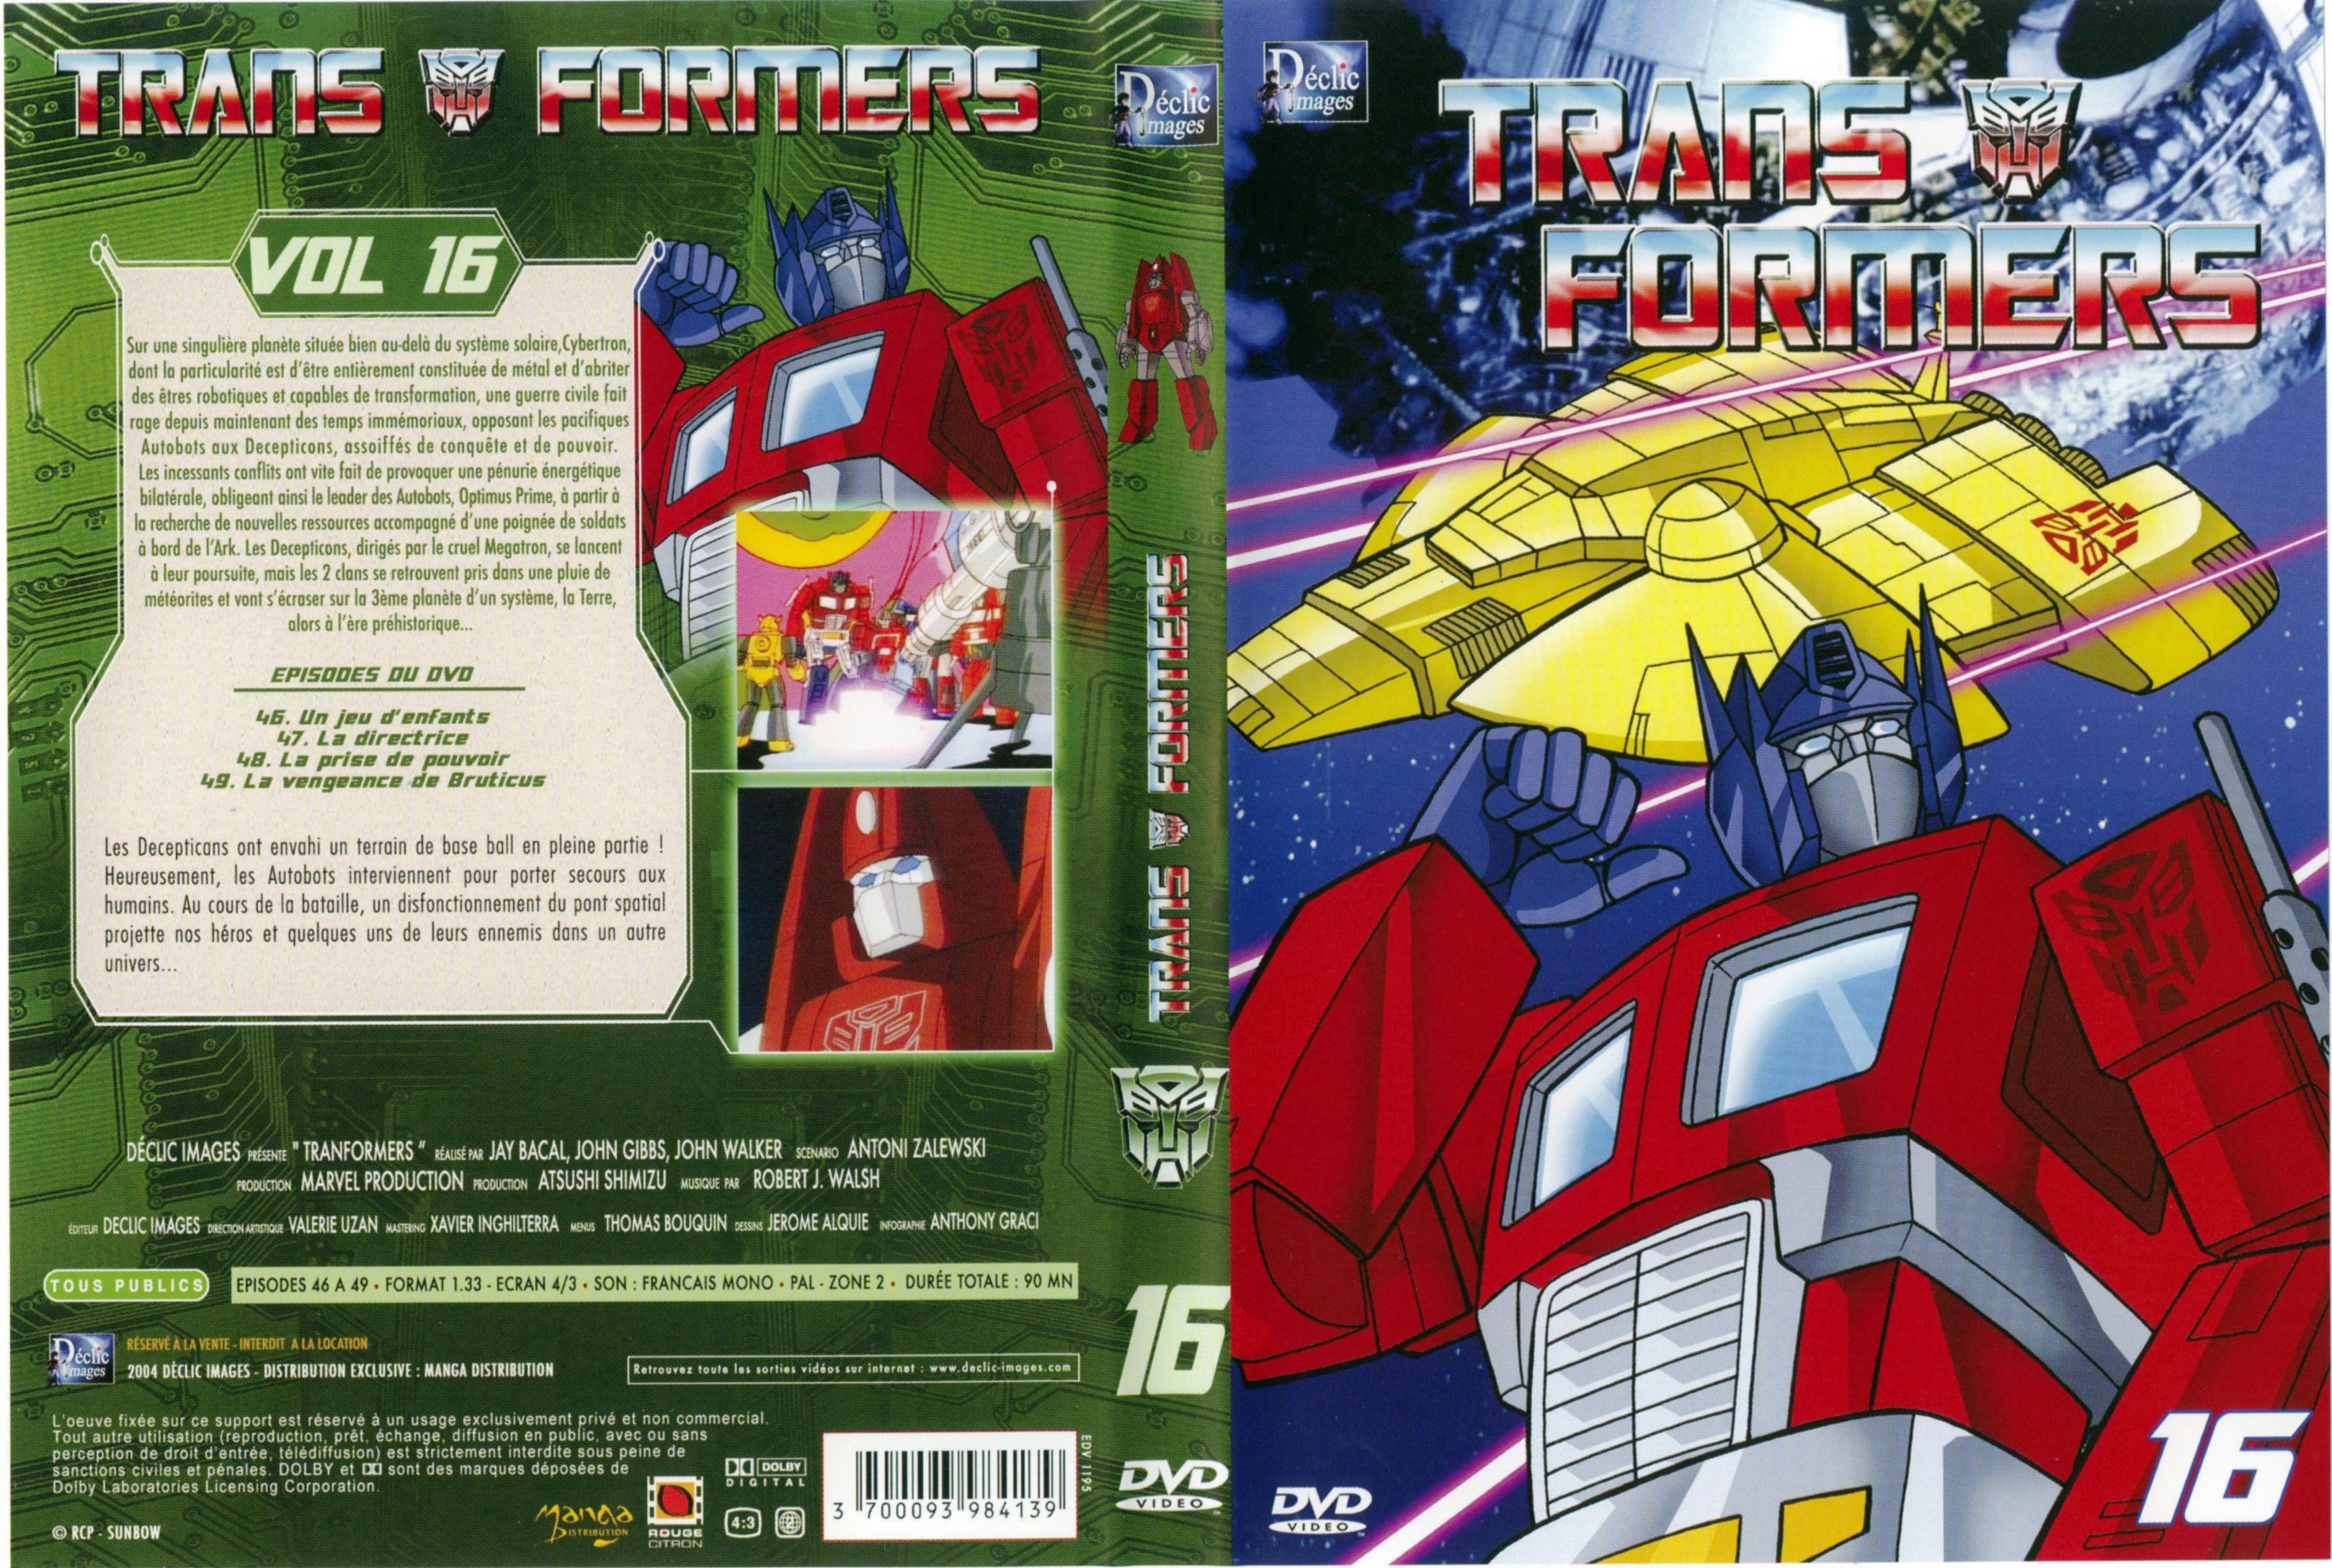 Jaquette DVD Transformers vol 16